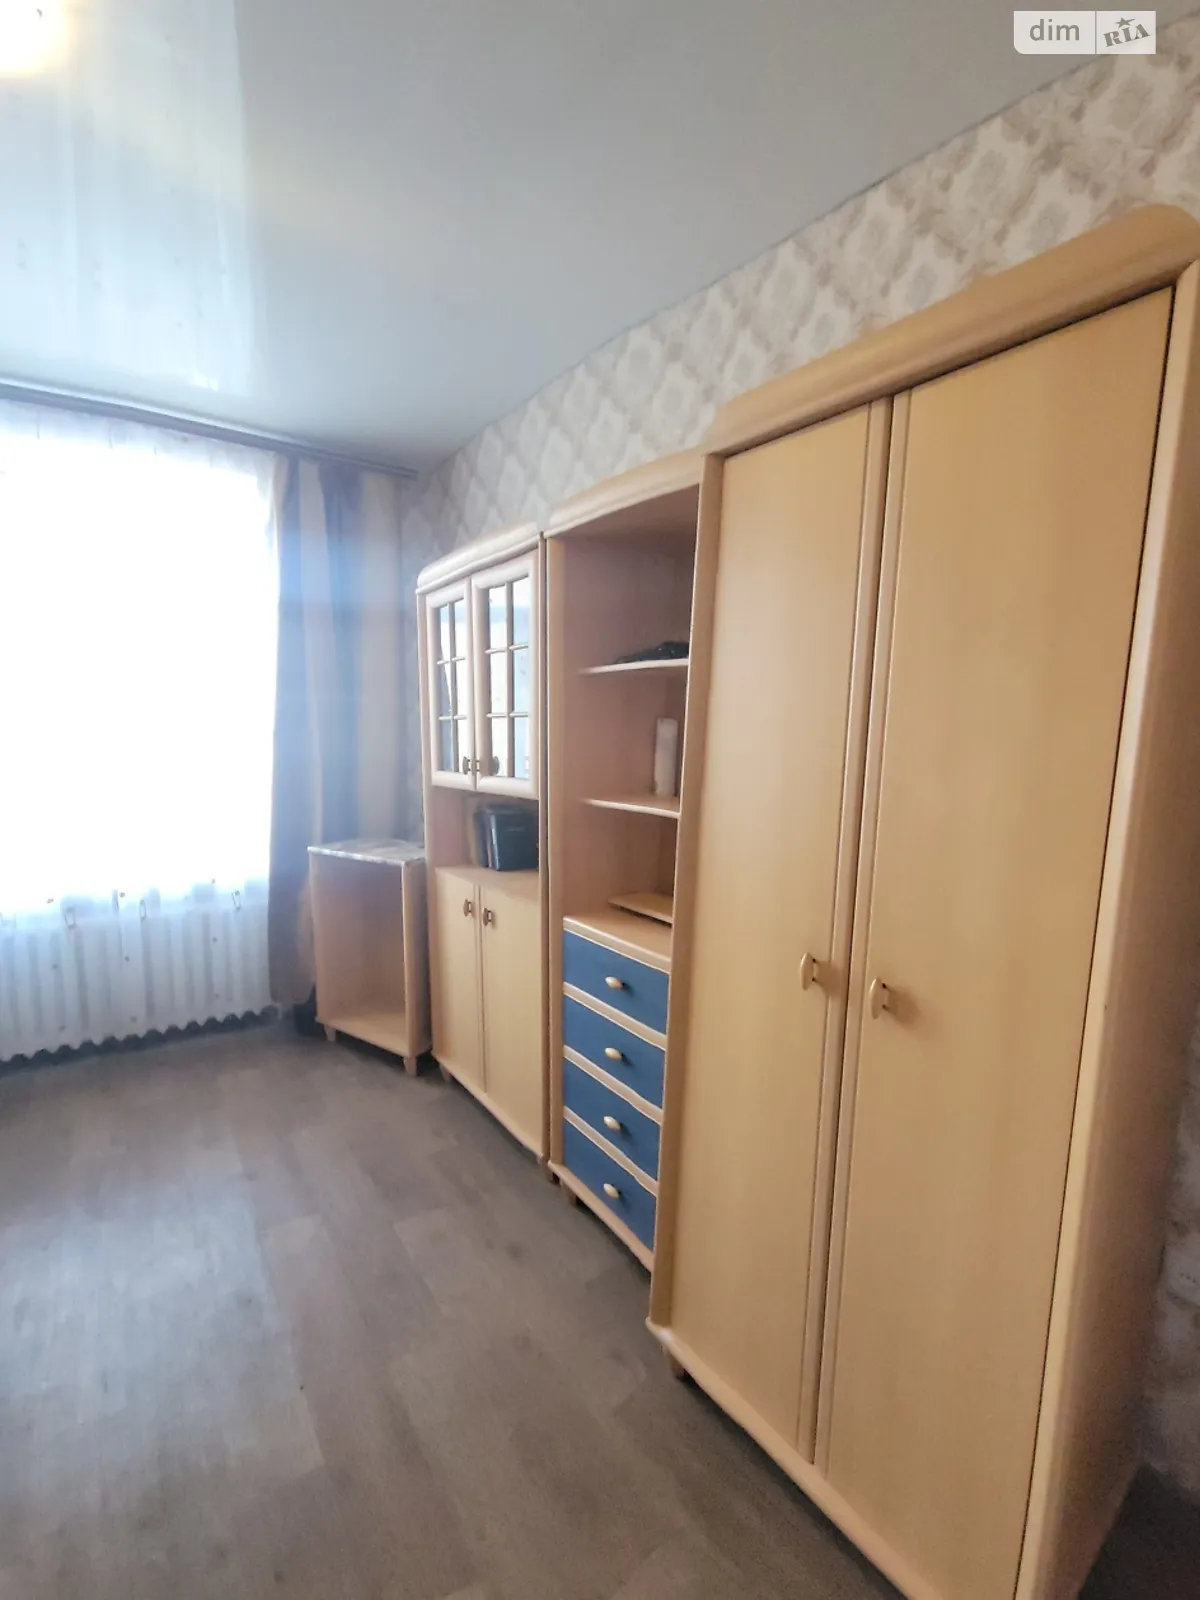 Продается комната 30 кв. м в Николаеве - фото 2